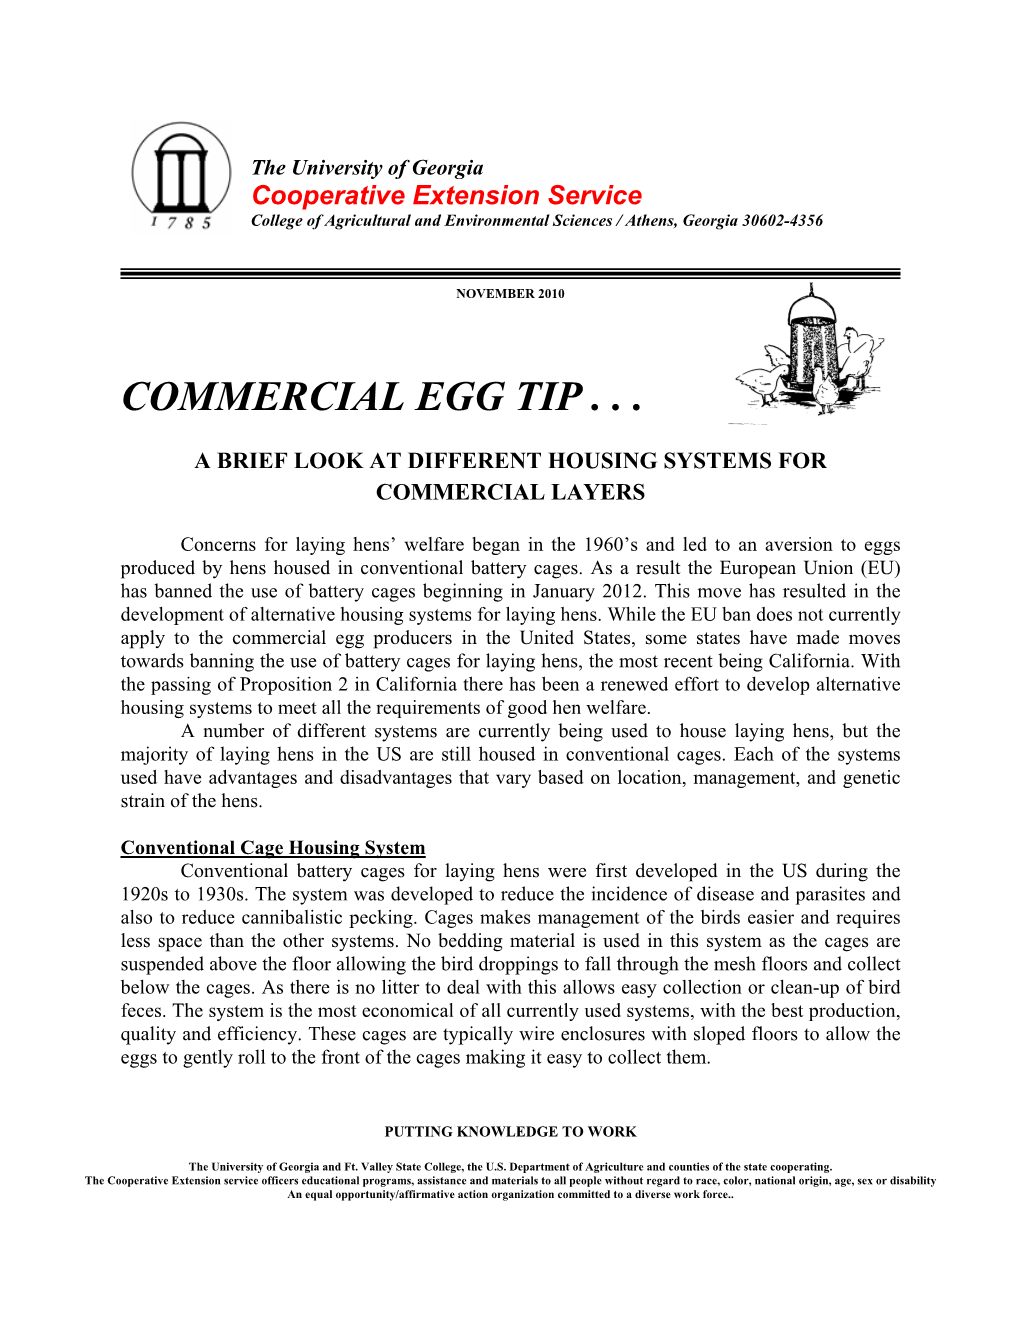 Commercial Egg Tip